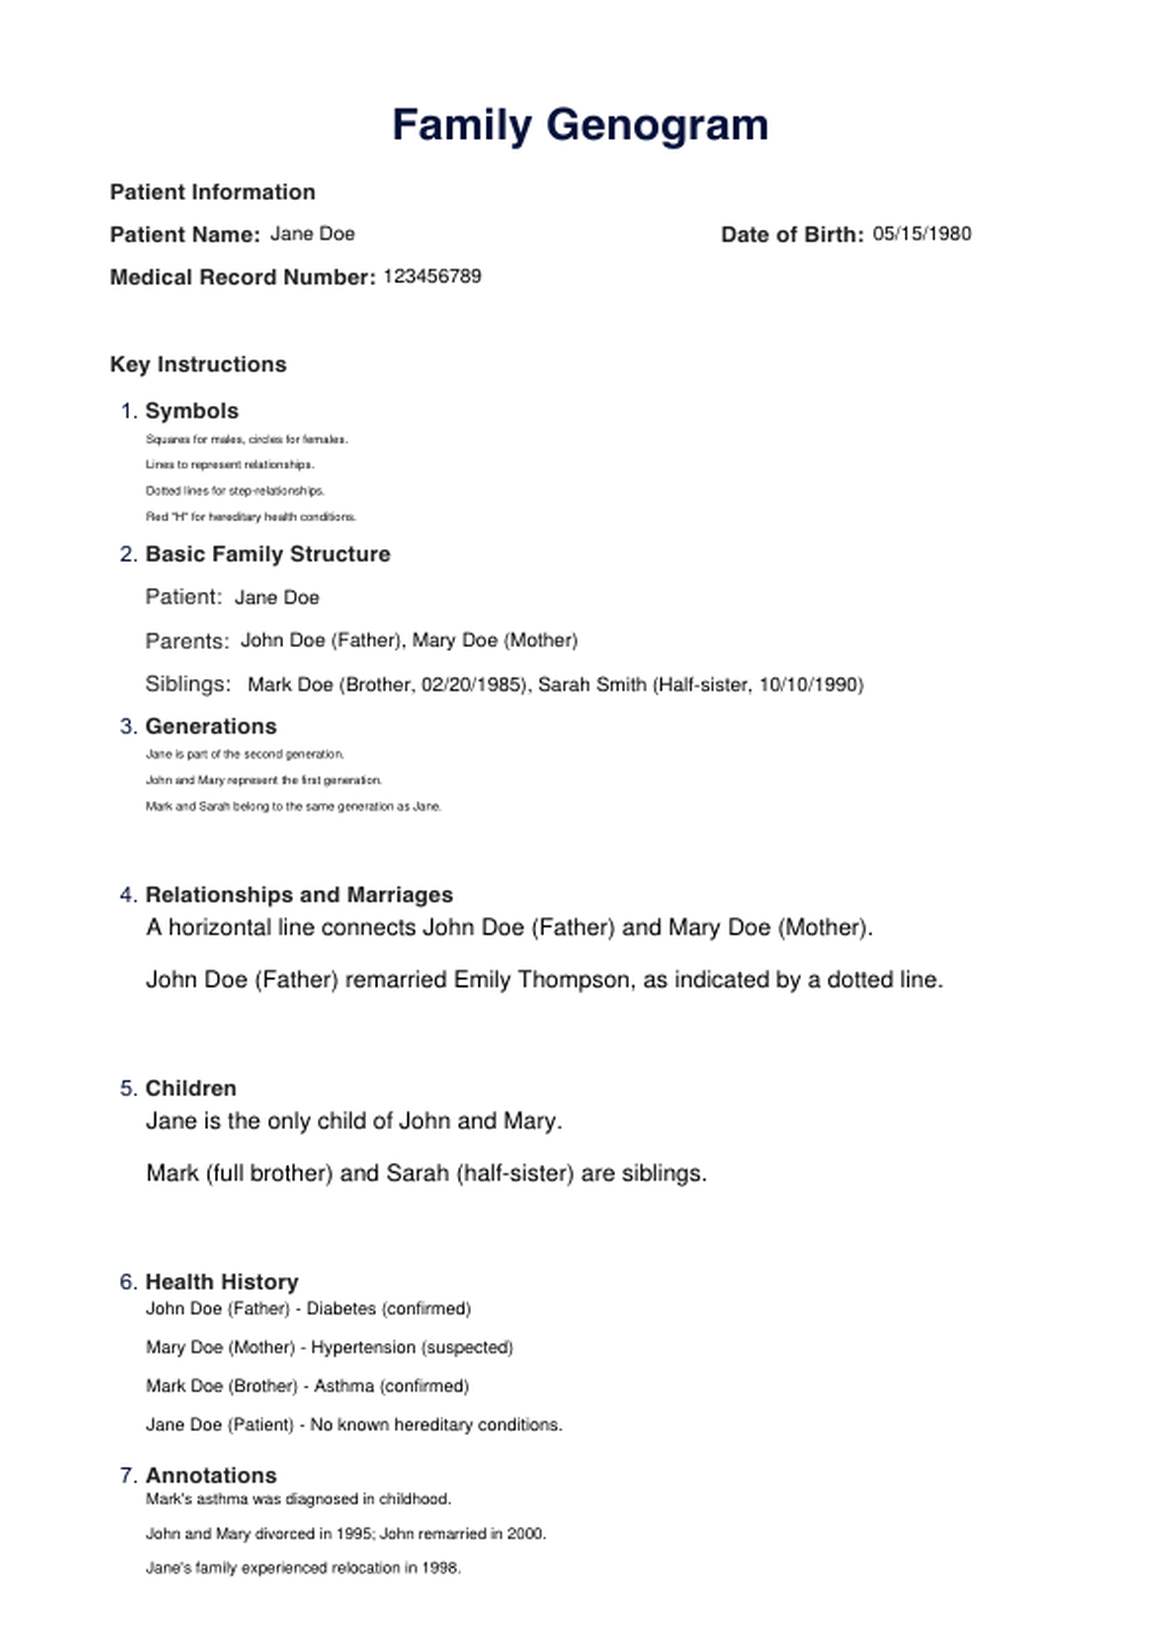 Family Genogram PDF Example